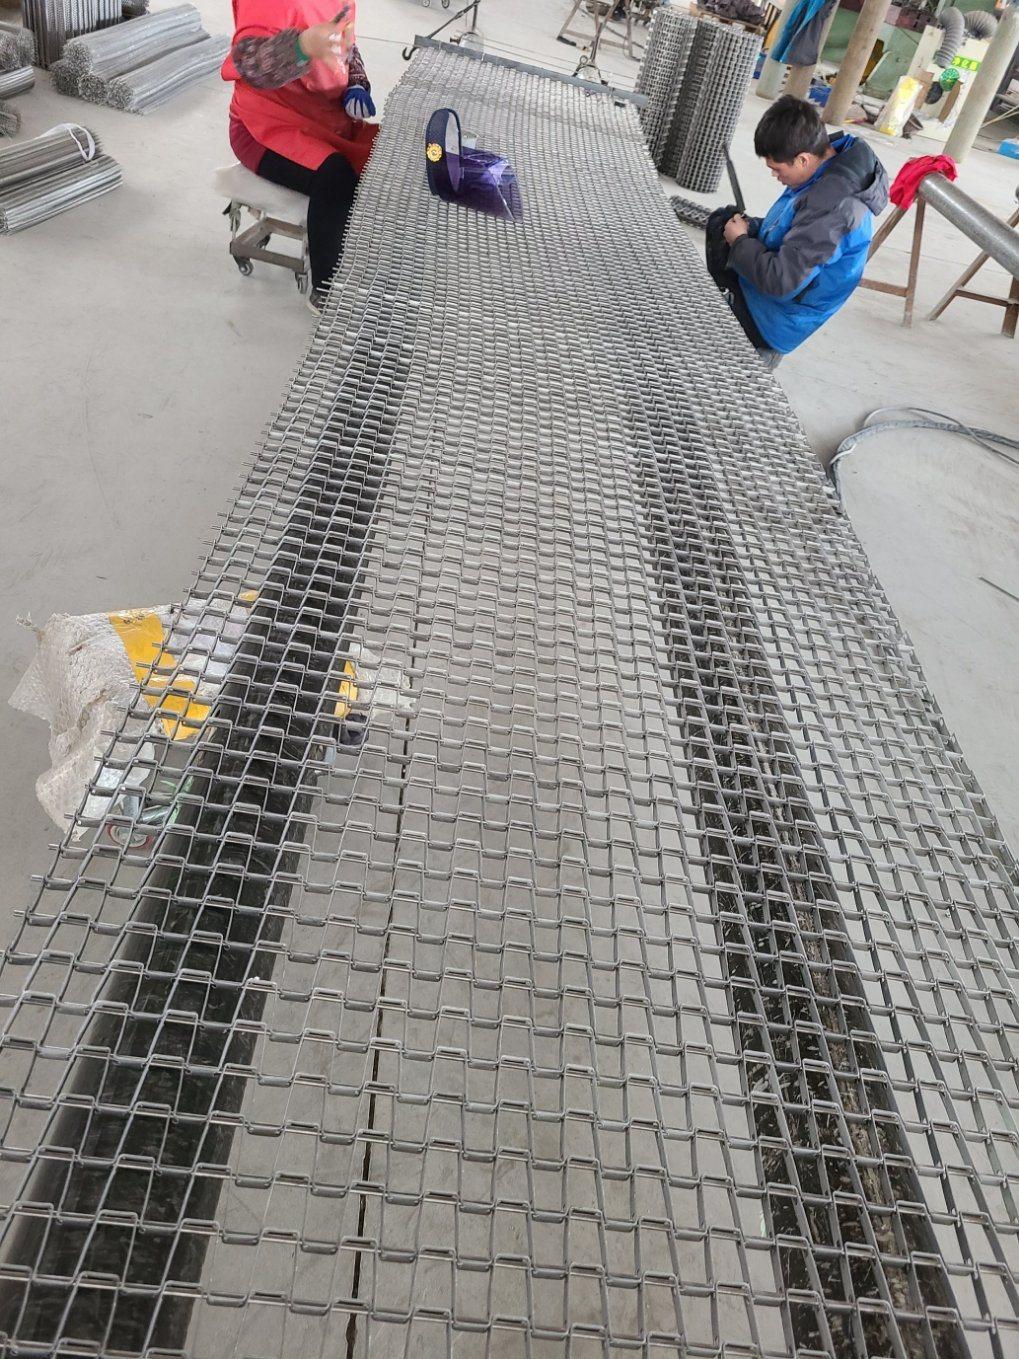 Stainless Steel Eye Joint Link Conveyor Belt